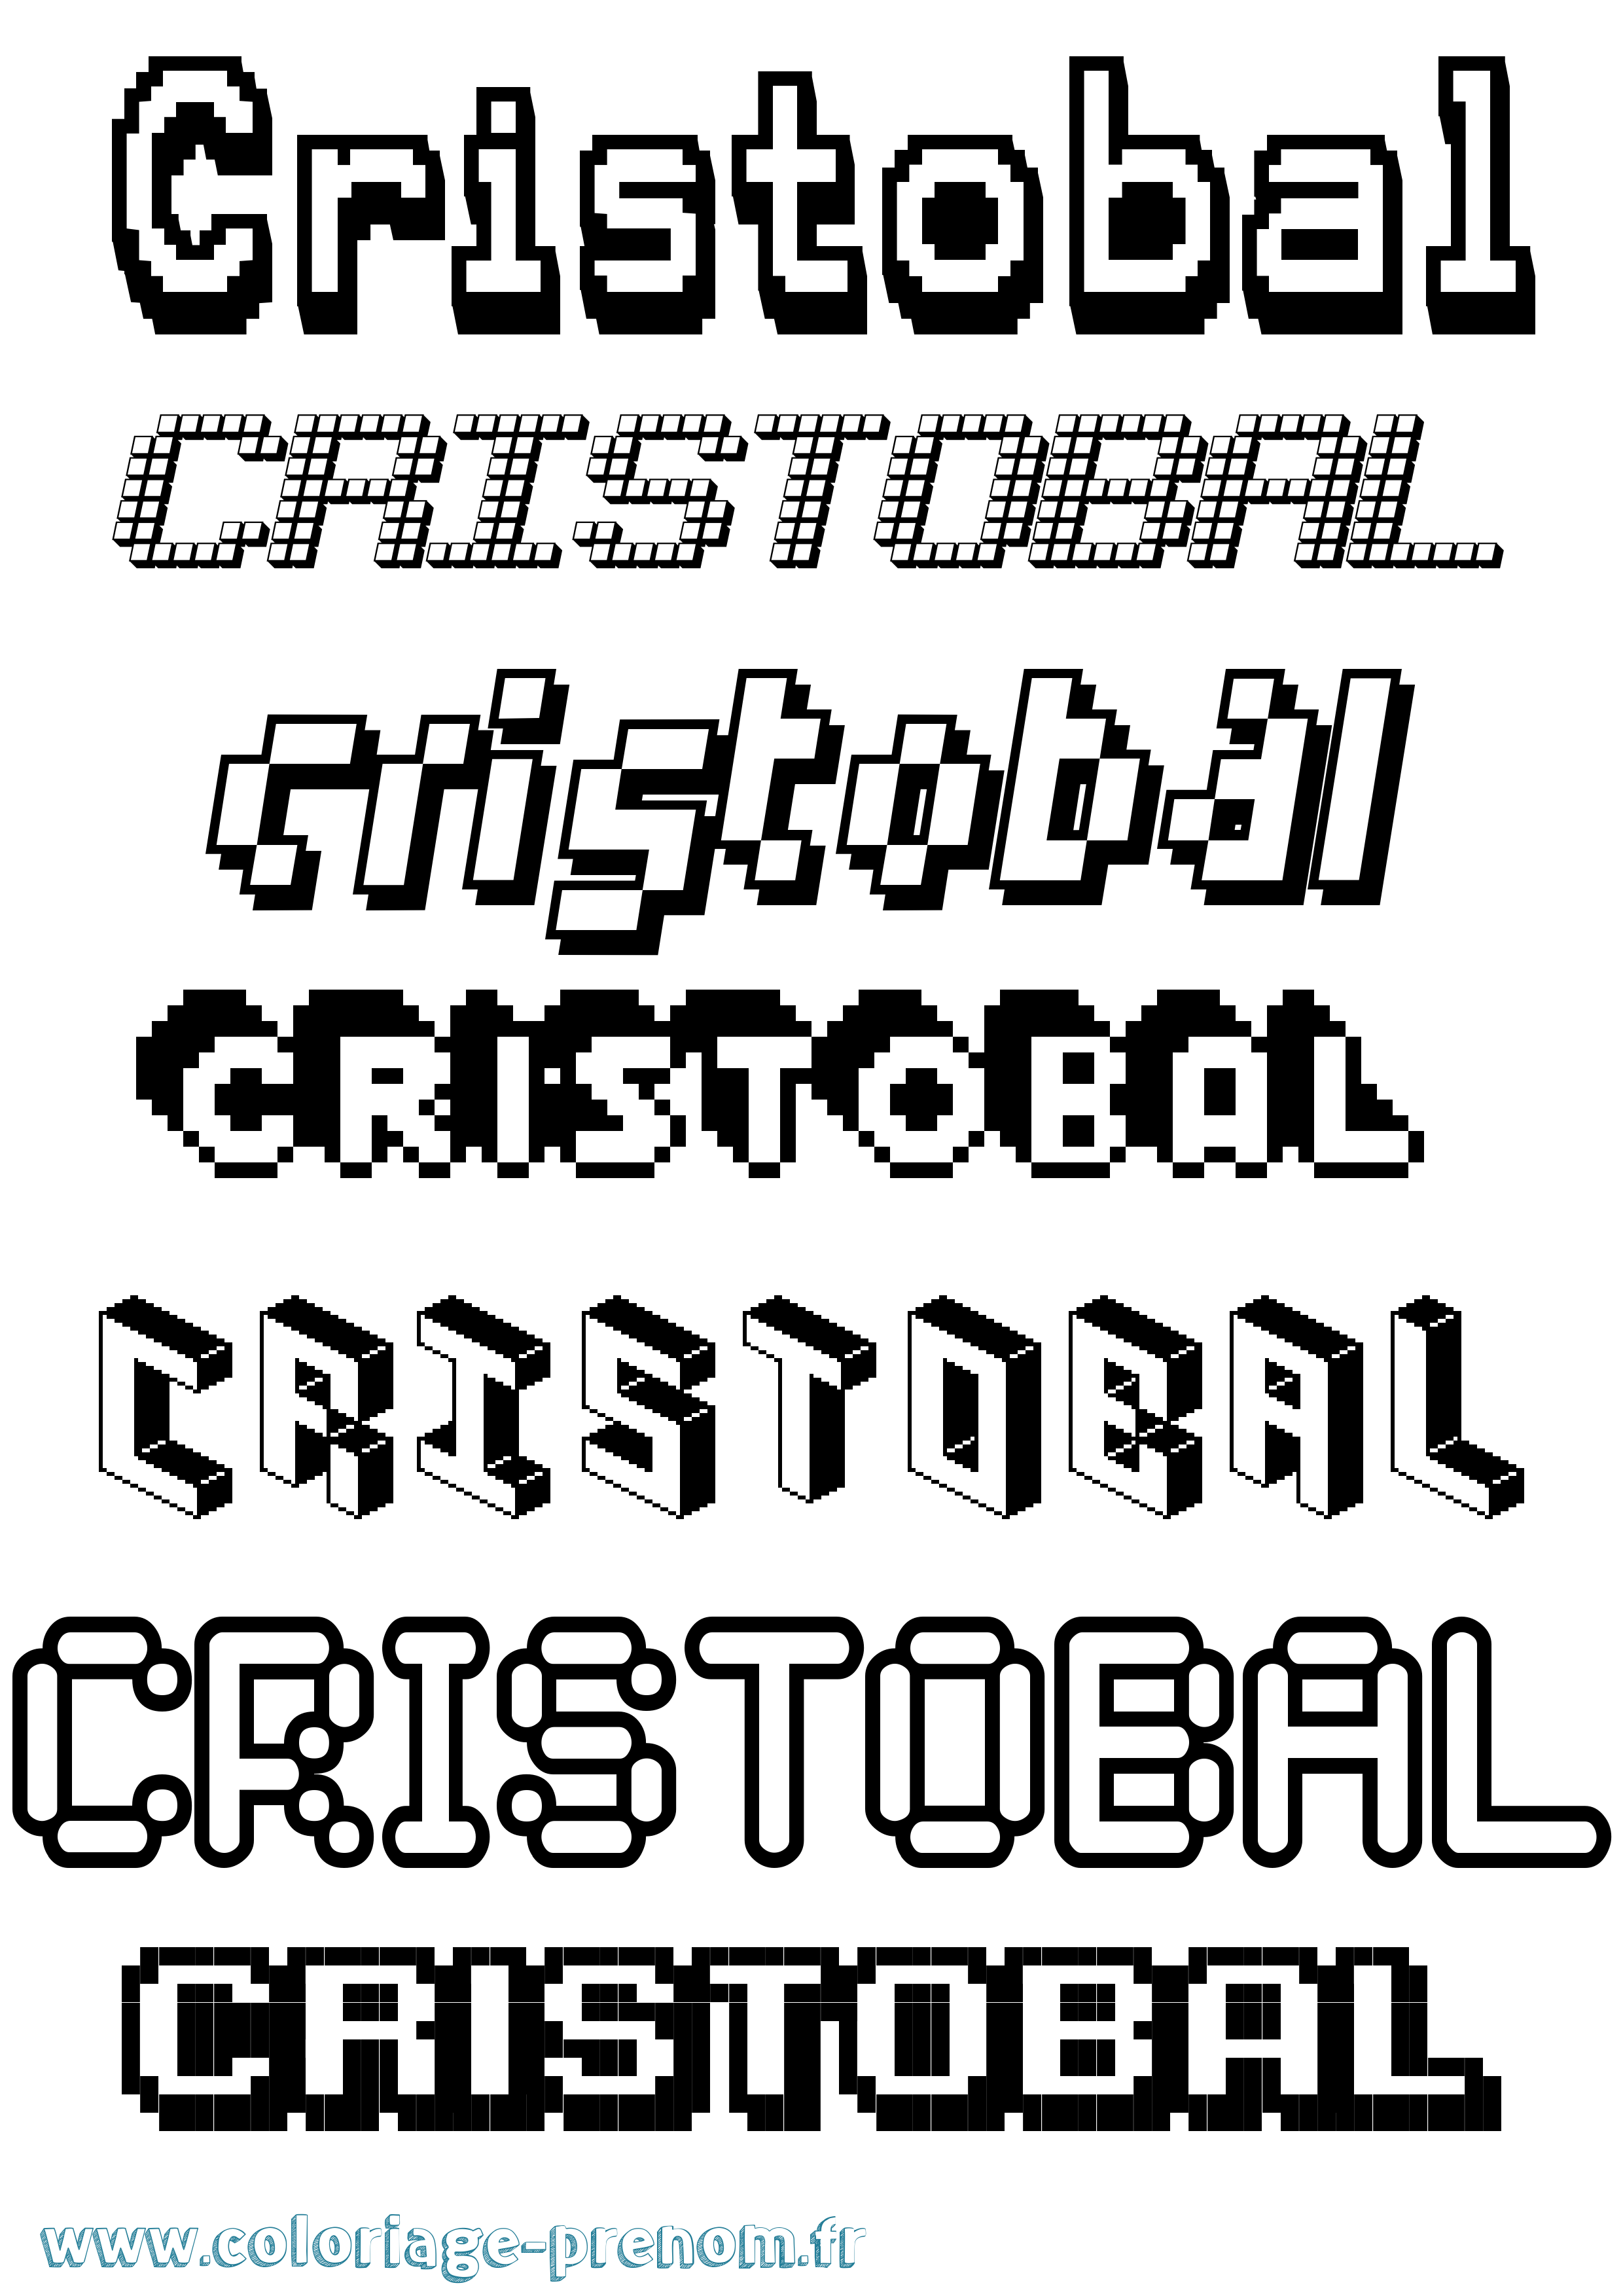 Coloriage prénom Cristobal Pixel